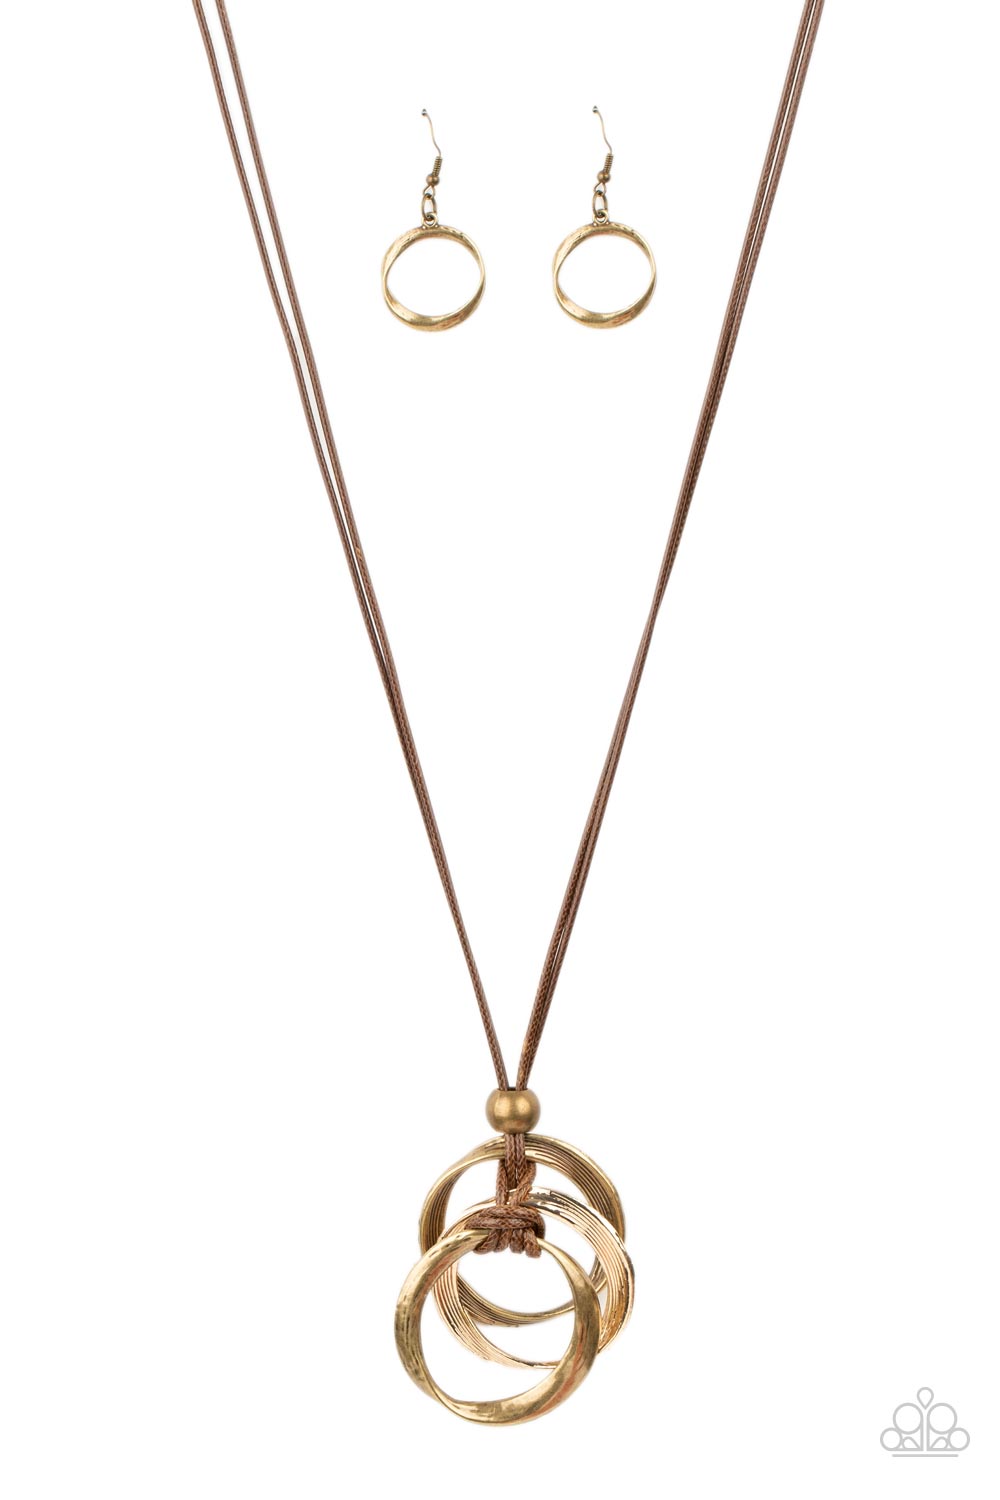 Paparazzi Accessories Harmonious Hardware - Brass Necklace & Earrings